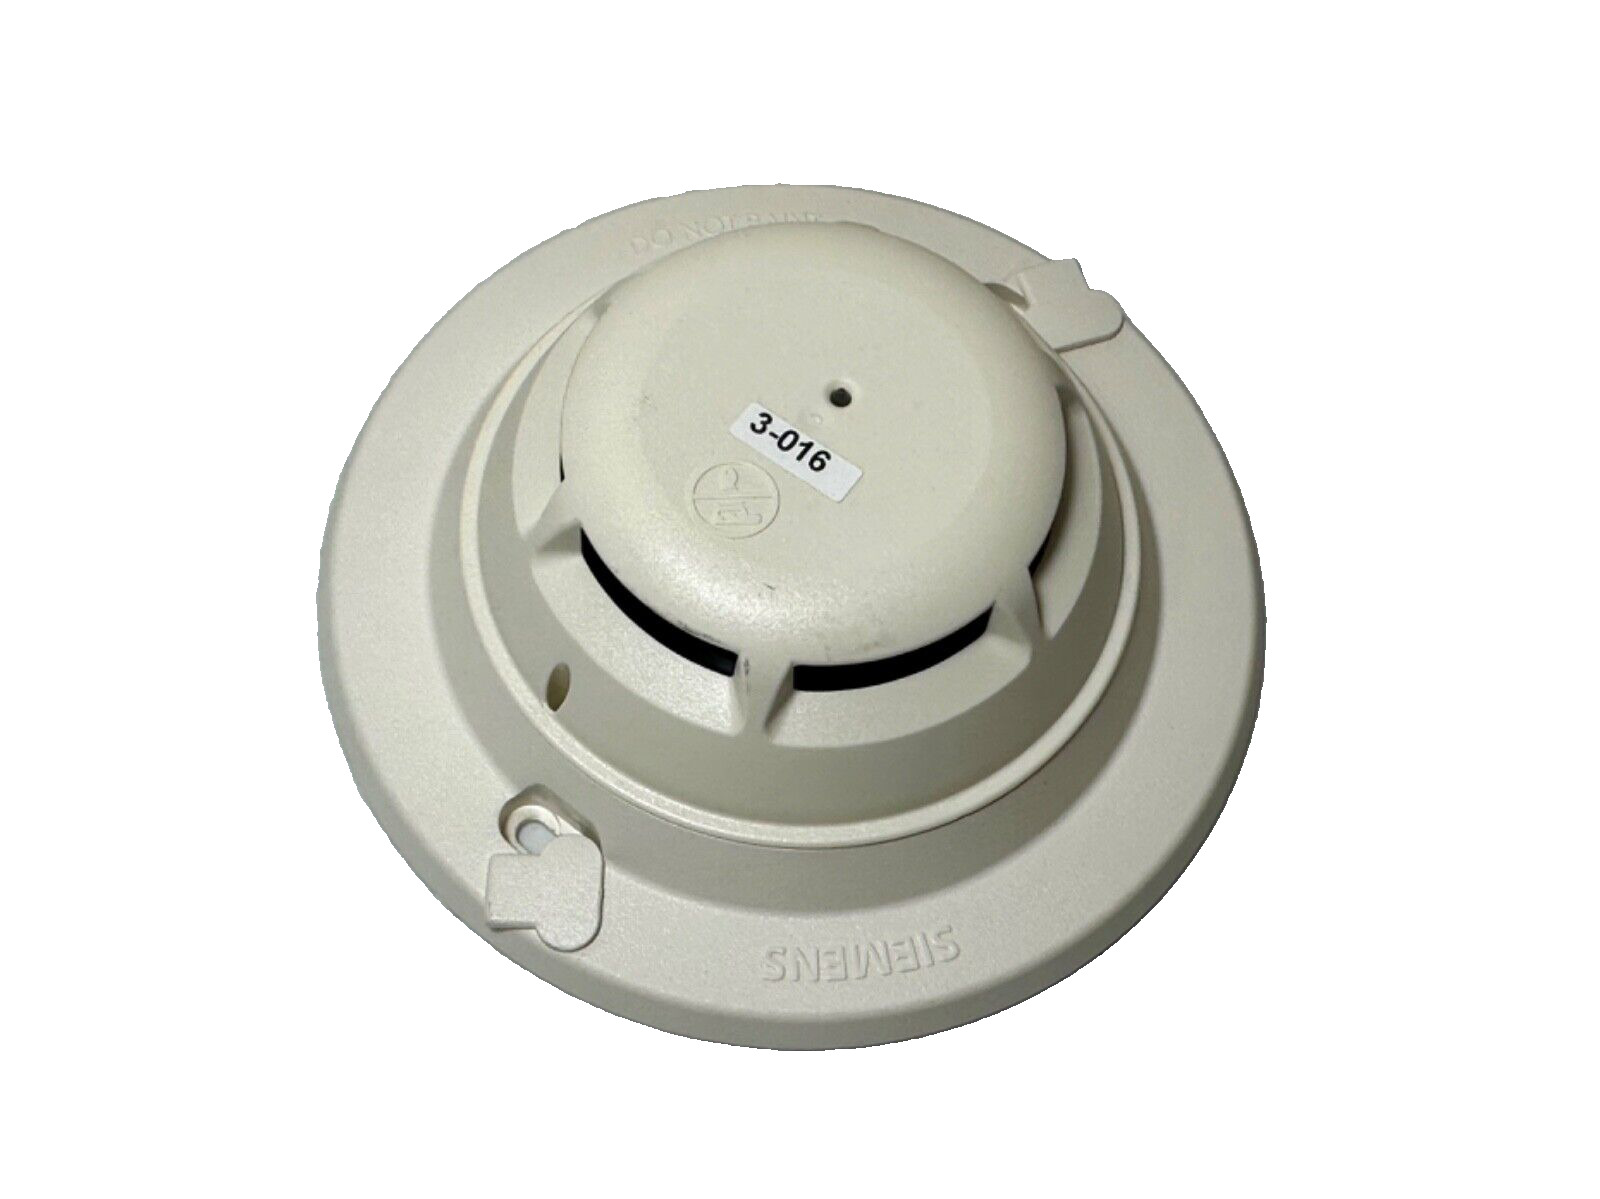 Siemens OP921 + DB-11 Fire Alarm Smoke Detector – DPU Tested - Free Programming